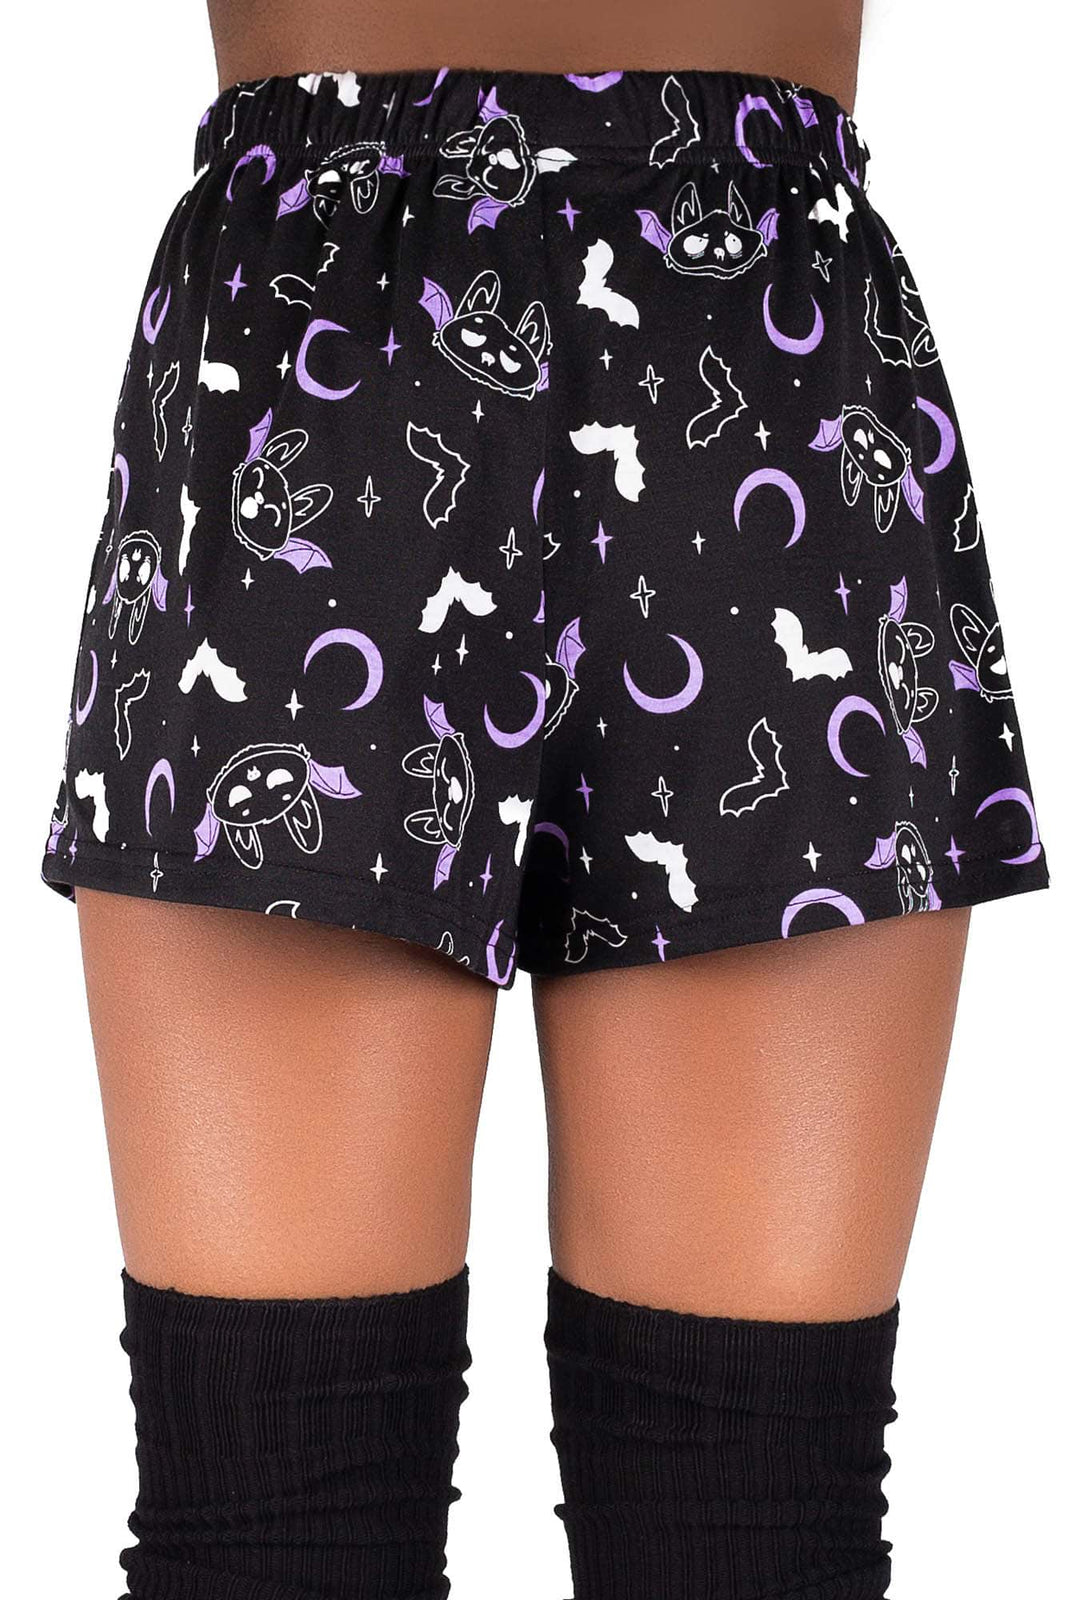 night shorts for women